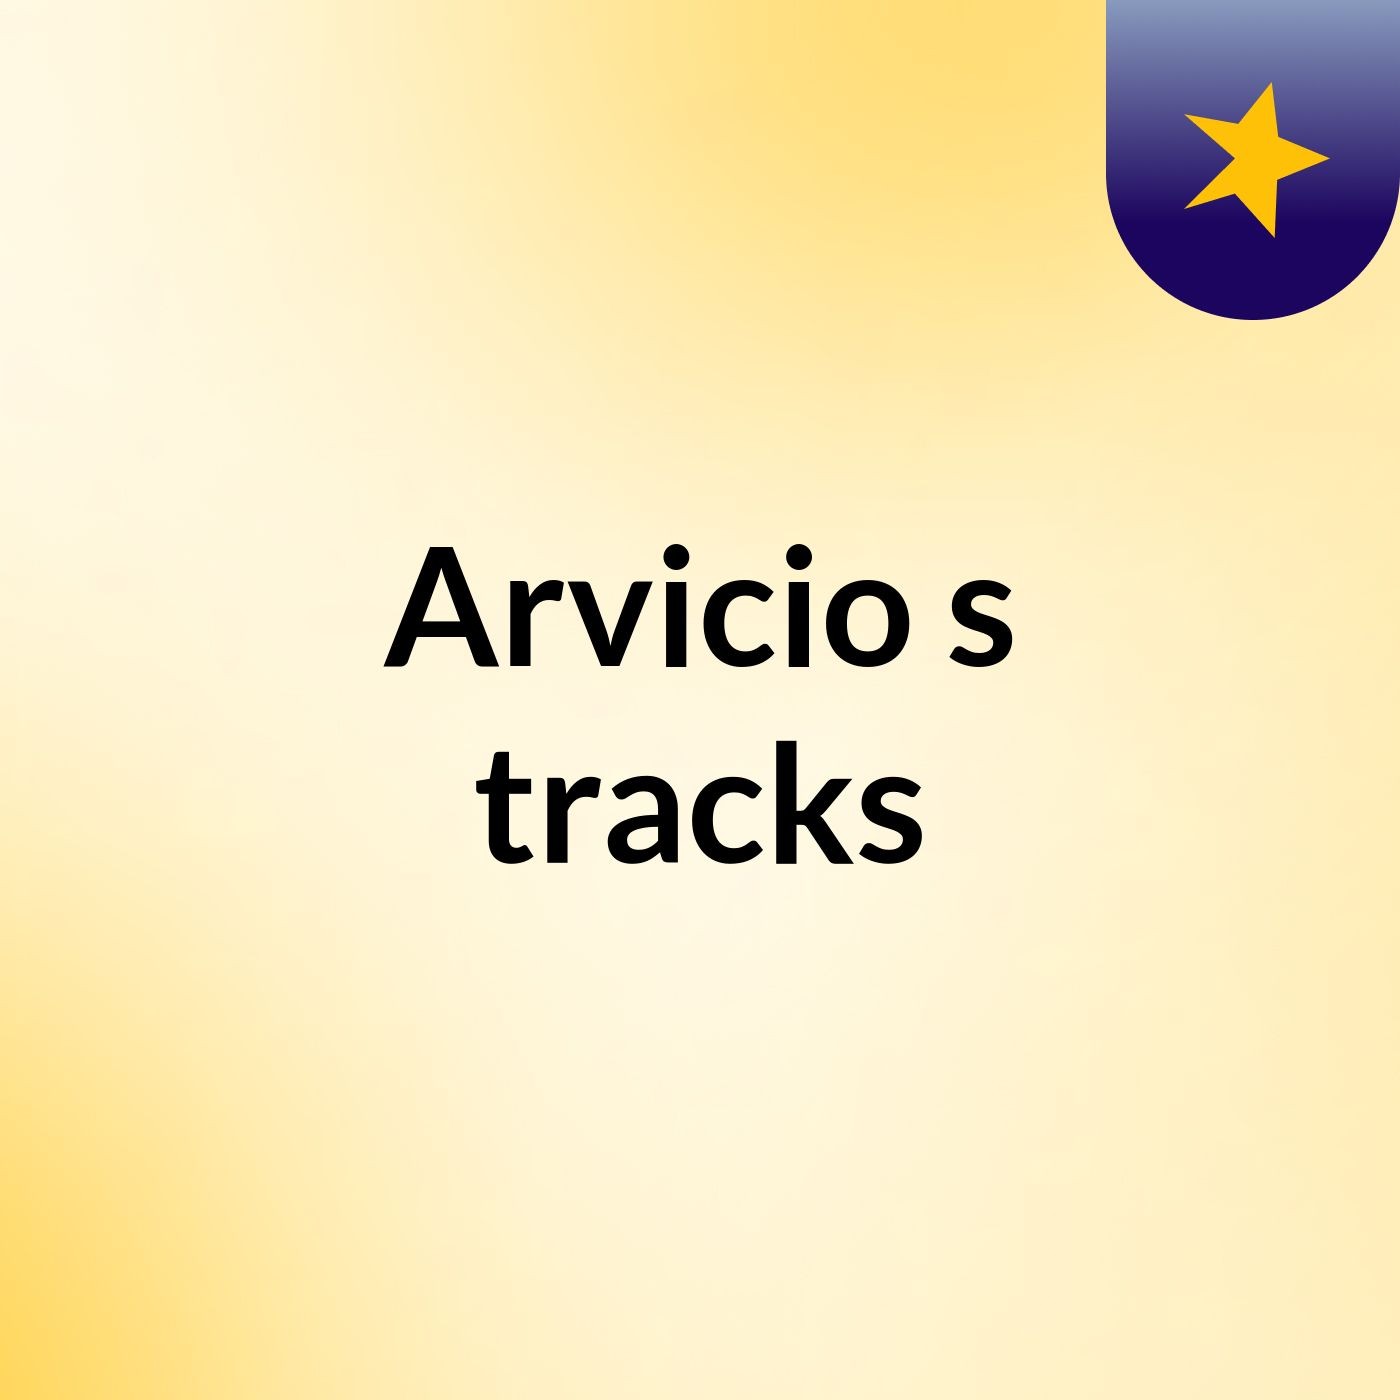 Arvicio's tracks